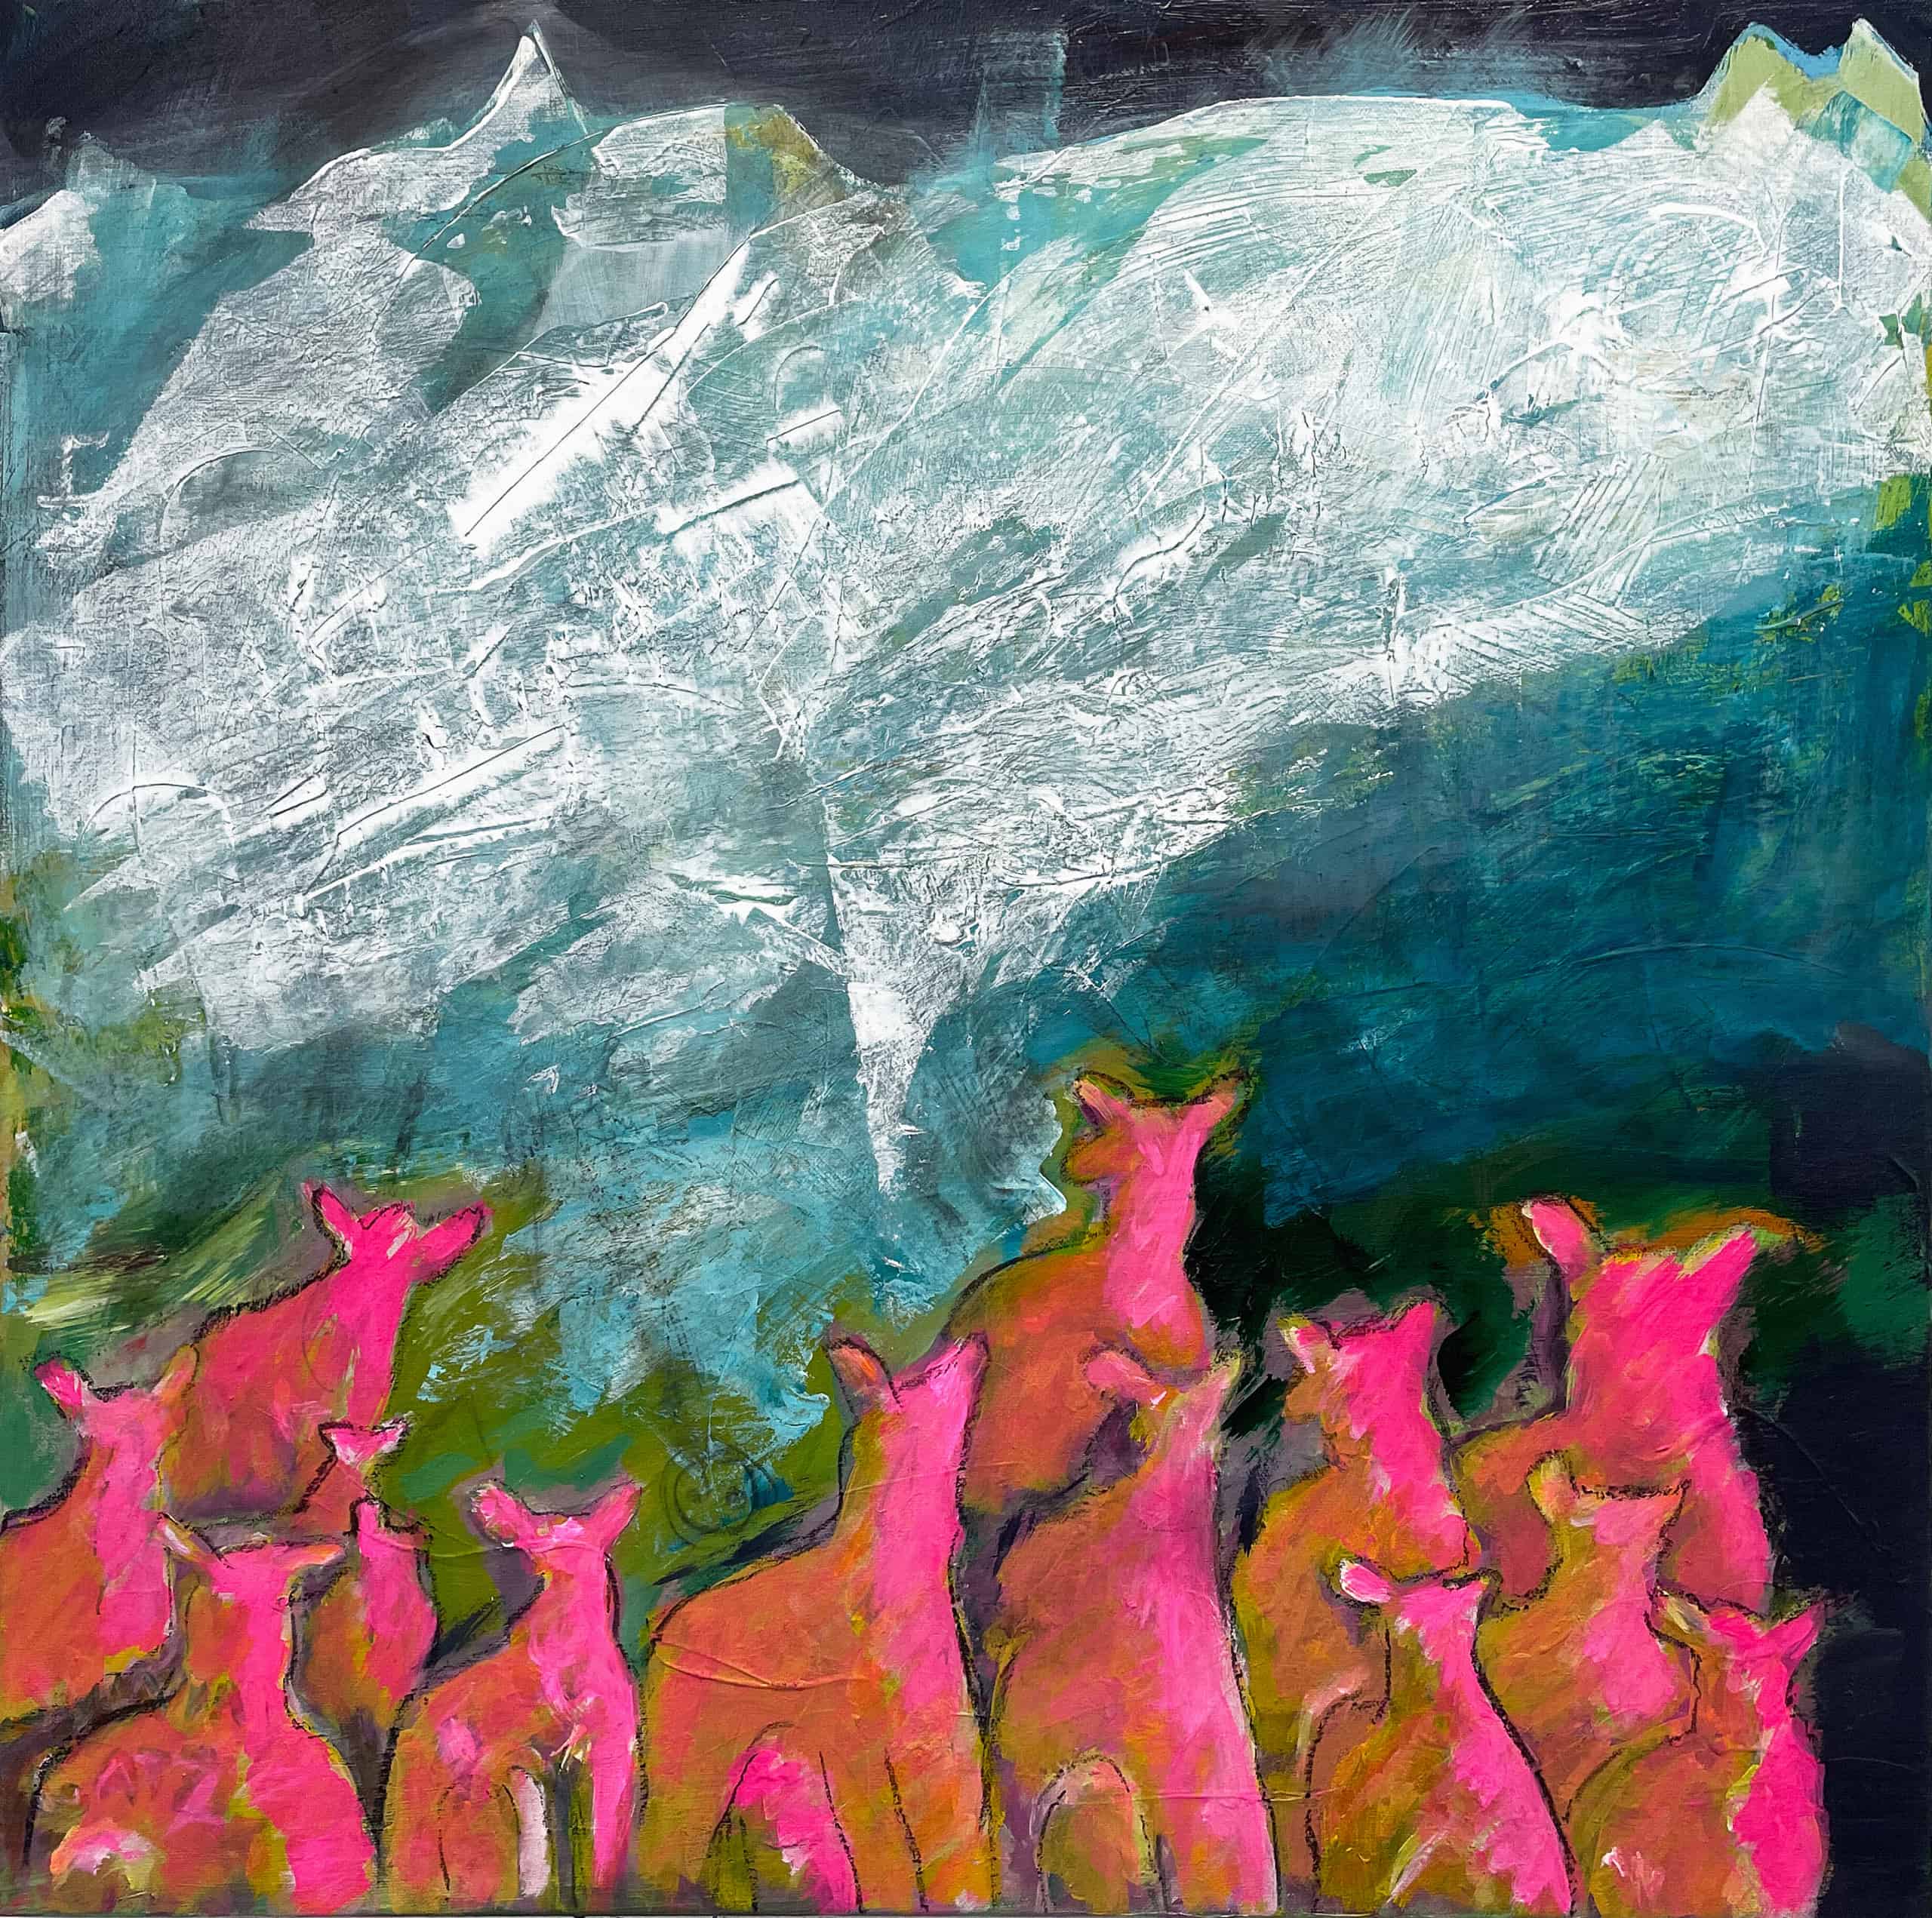 Sylvia Gatz "Untitled (Massif central)" (2021). Acrylic on canvas. 80 x 80 cm